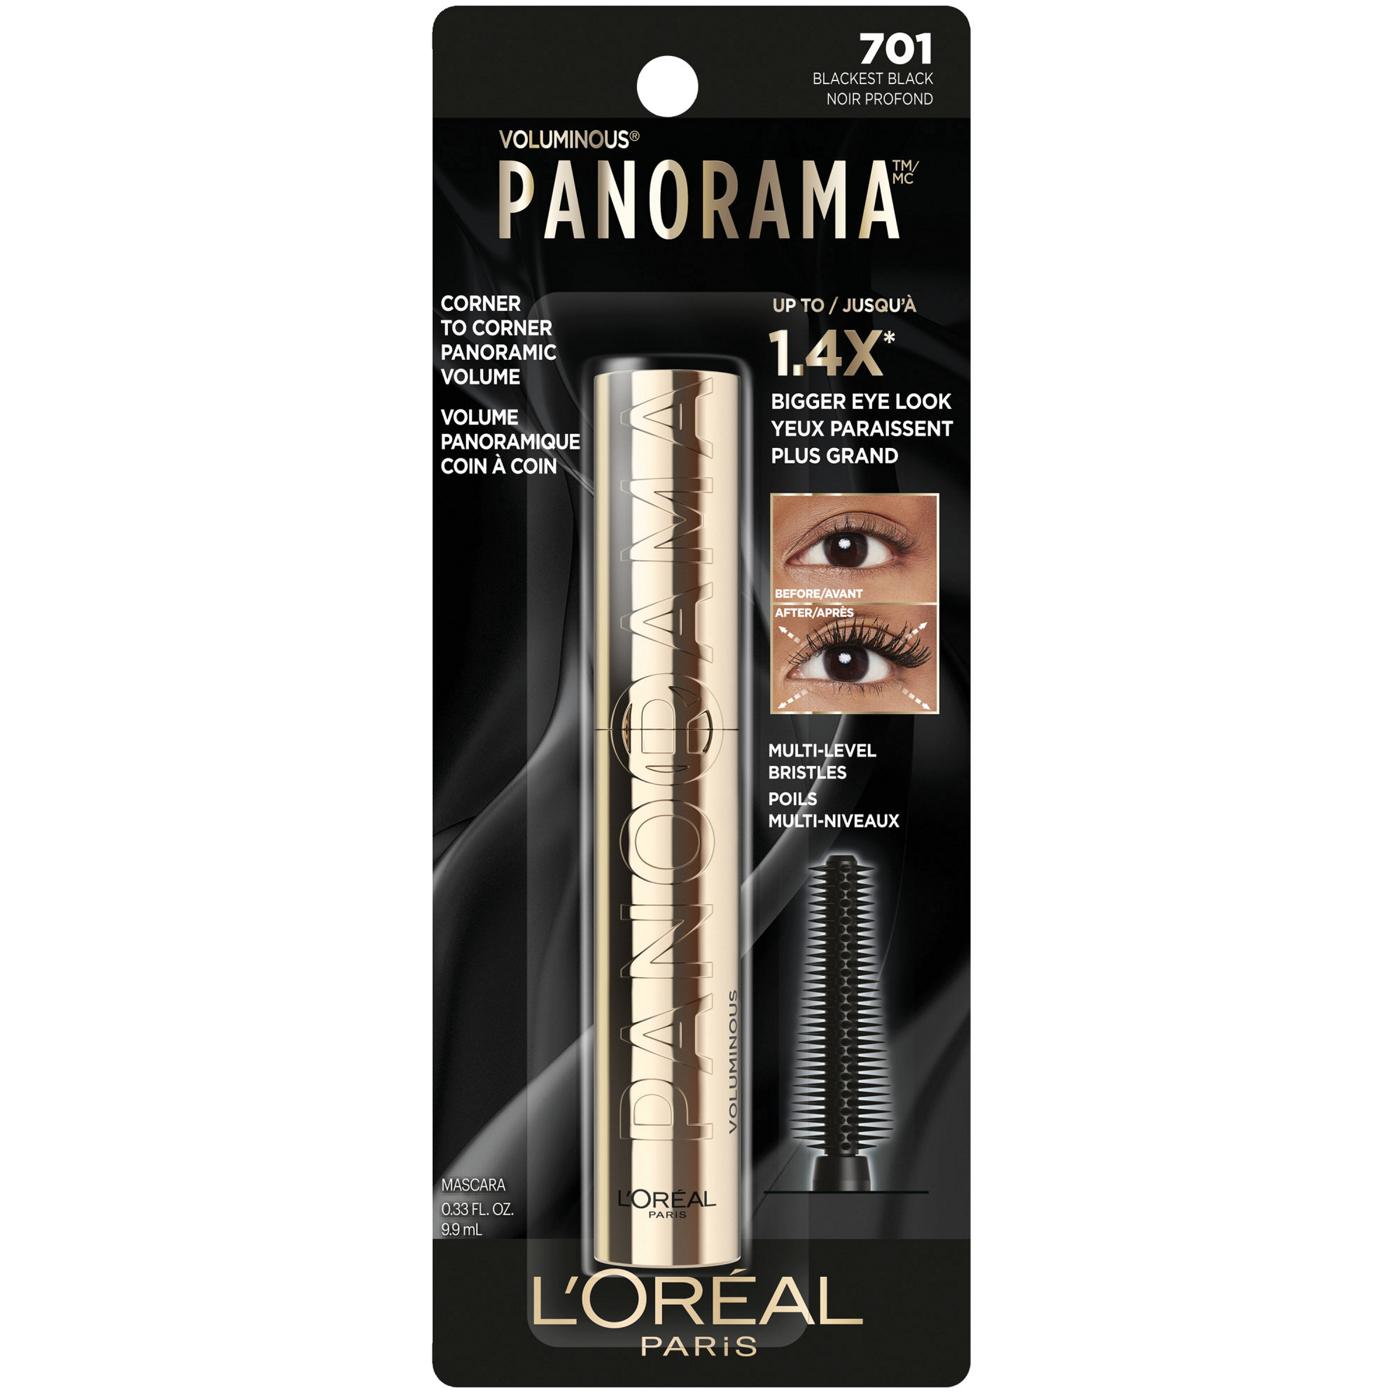 L'Oréal Paris Voluminous Panorama Mascara, Washable, Volumizing 
Blackest Black; image 1 of 7